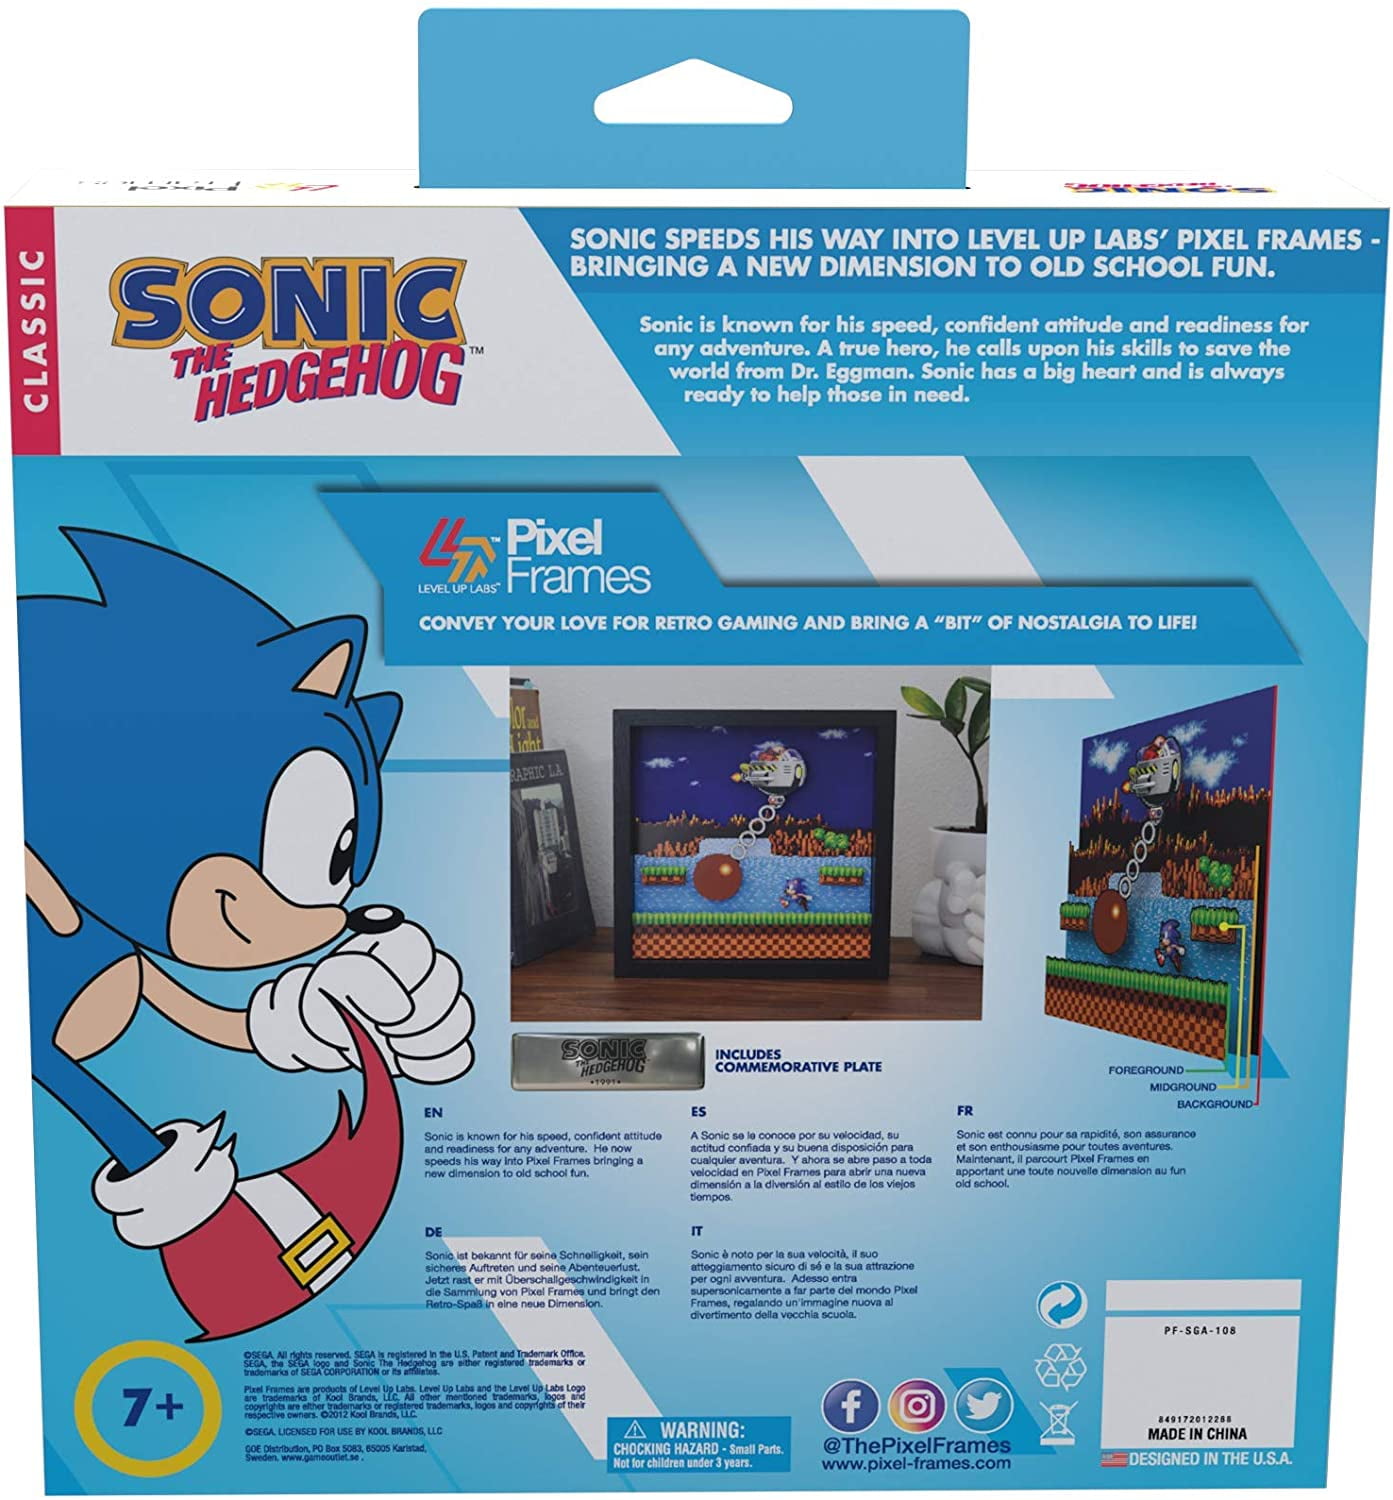 Boneco Sonic Diorama Set 25 Mu R$ 260 - Promobit